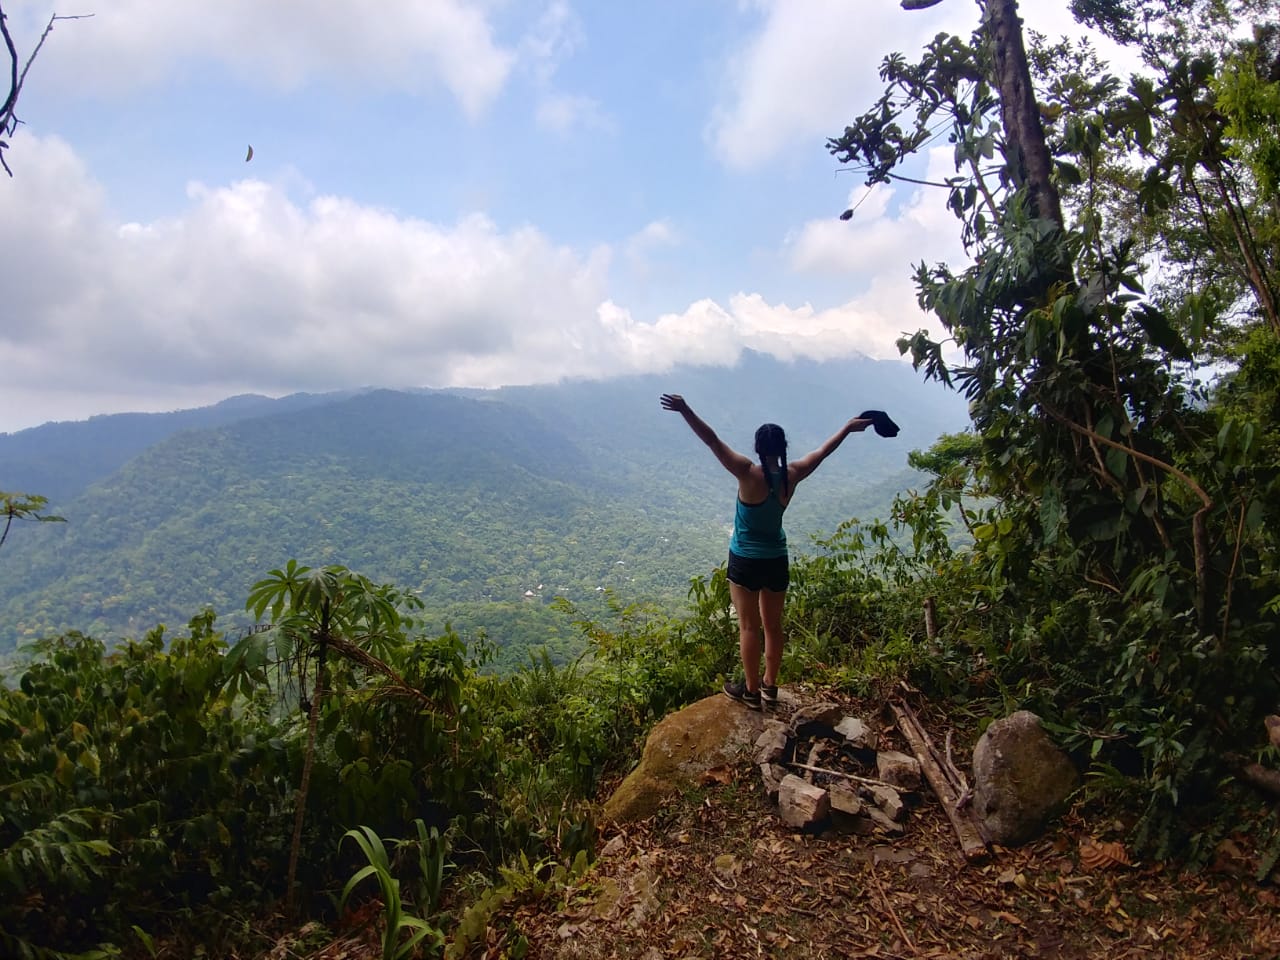 Volunteer Honduras La Ceiba Review Kira Wolpow Premed program